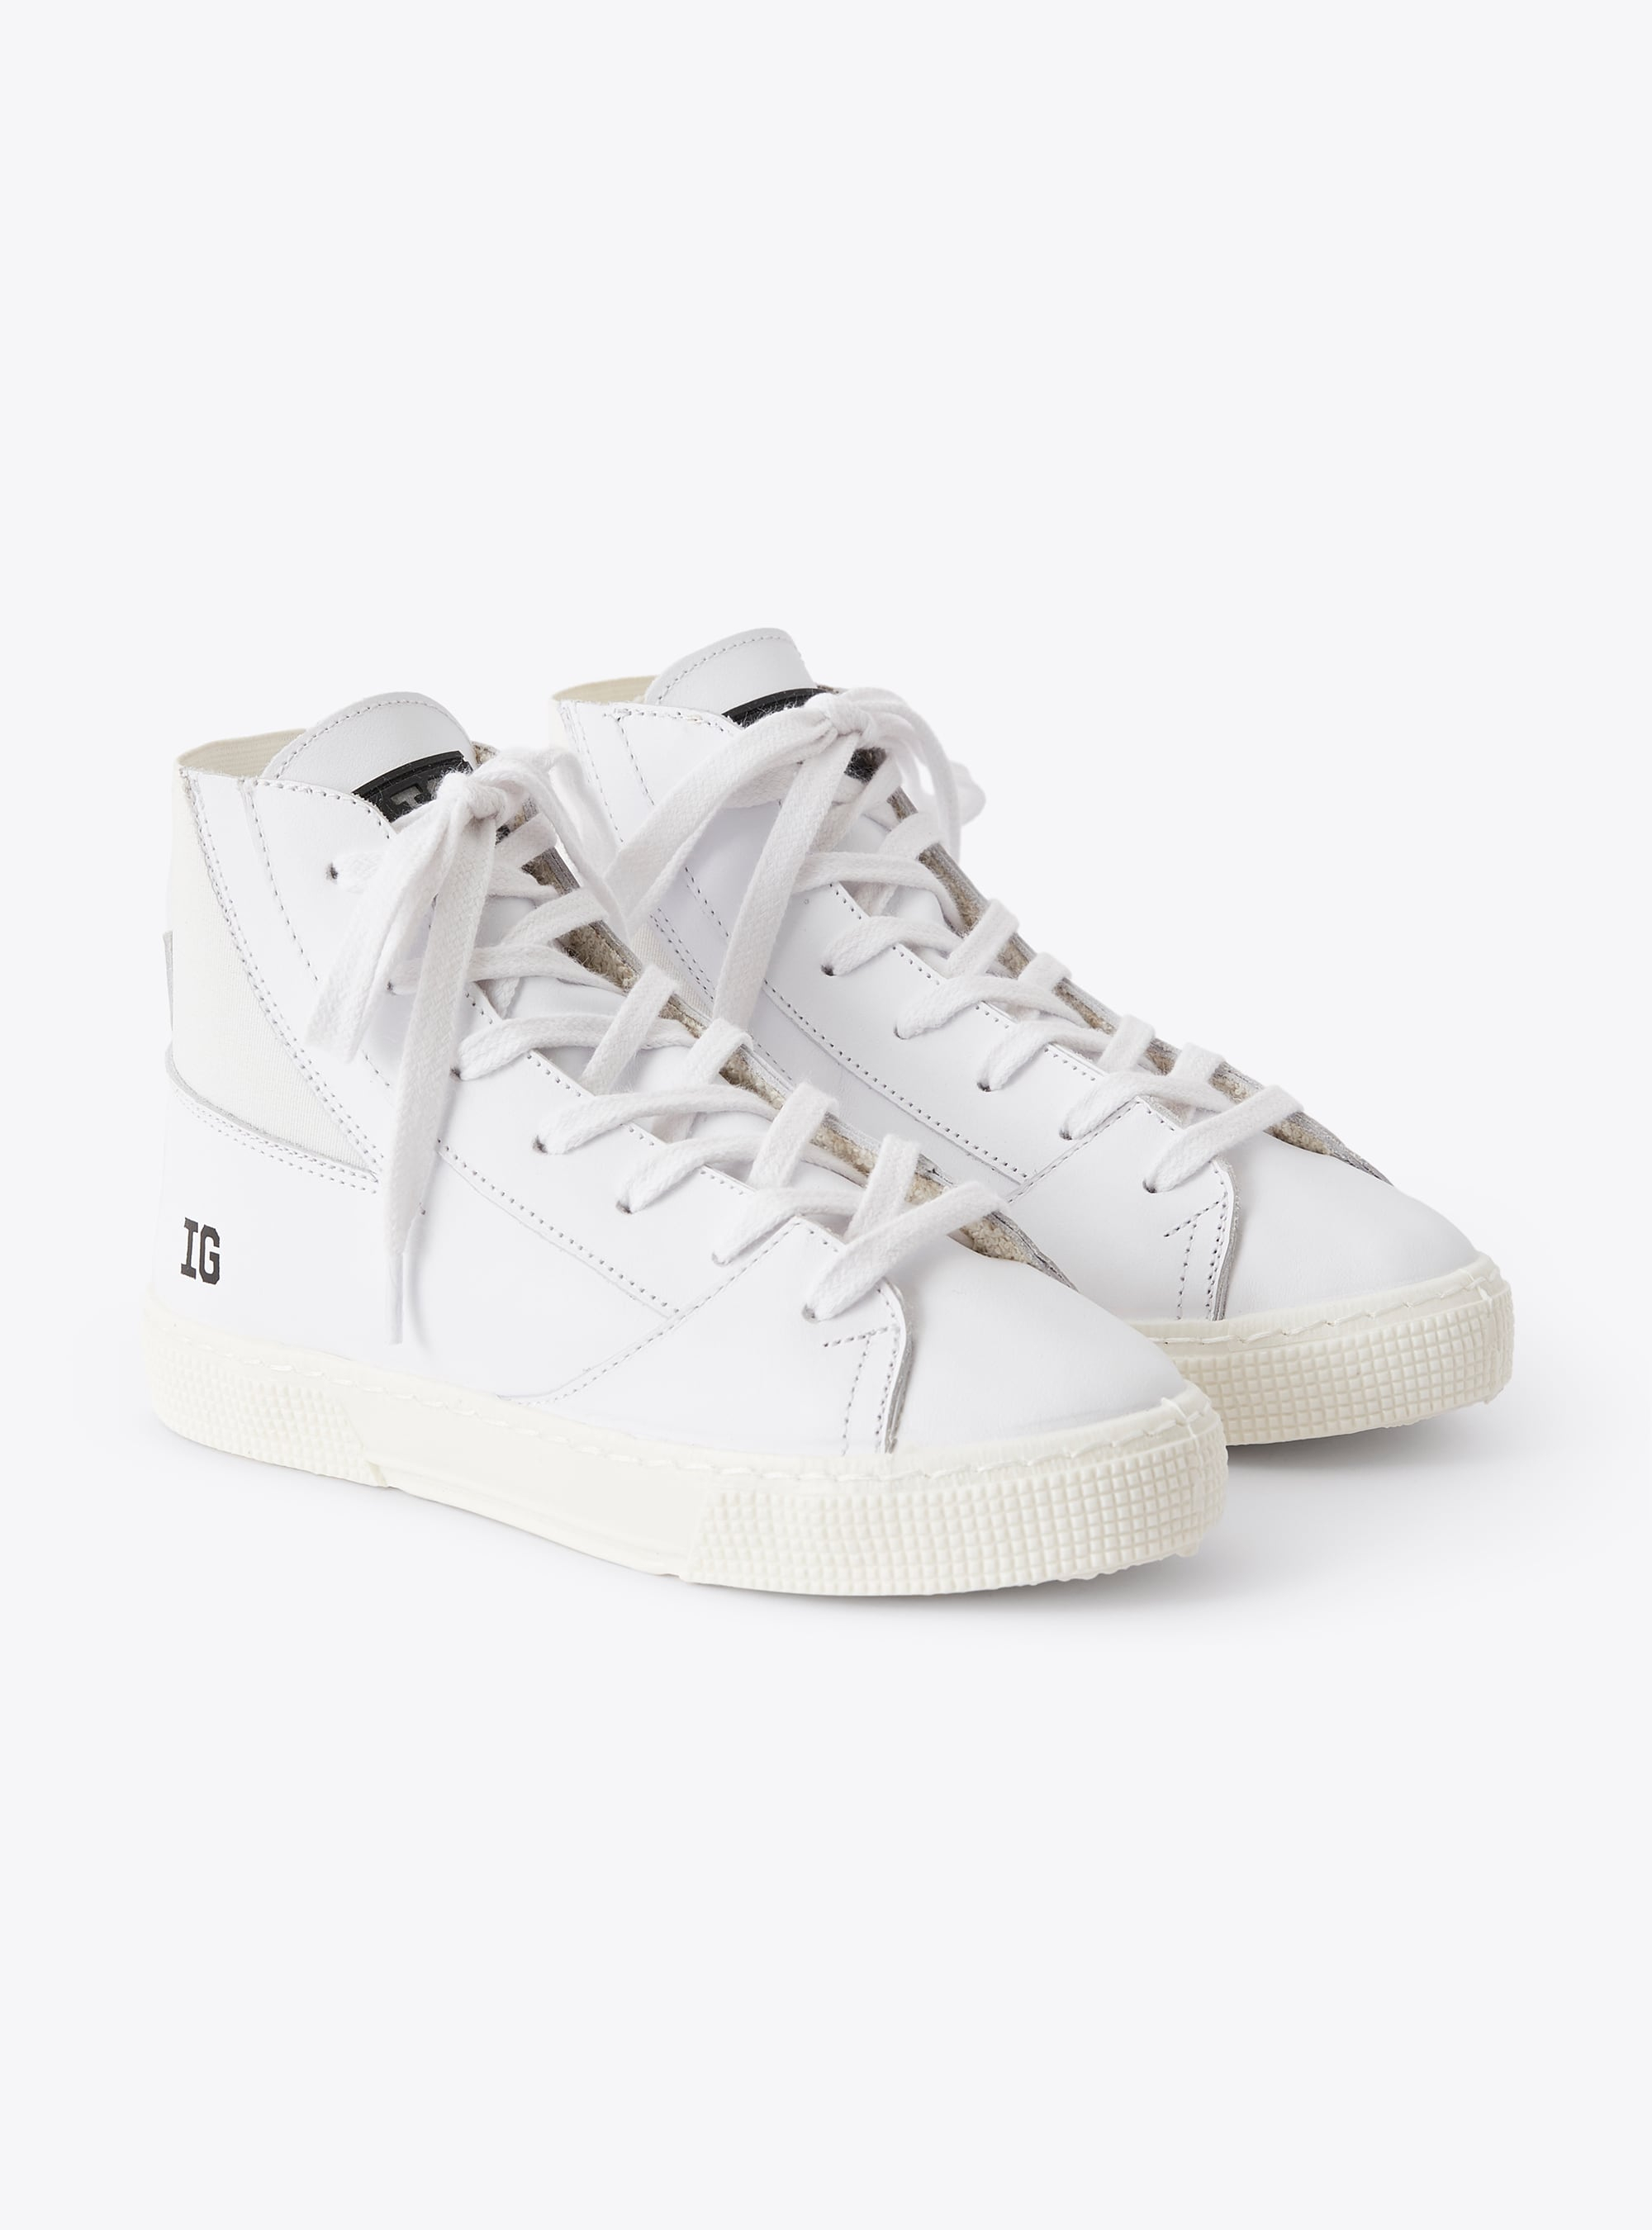 Sneakers IG high top in pelle bianca - Scarpe - Il Gufo